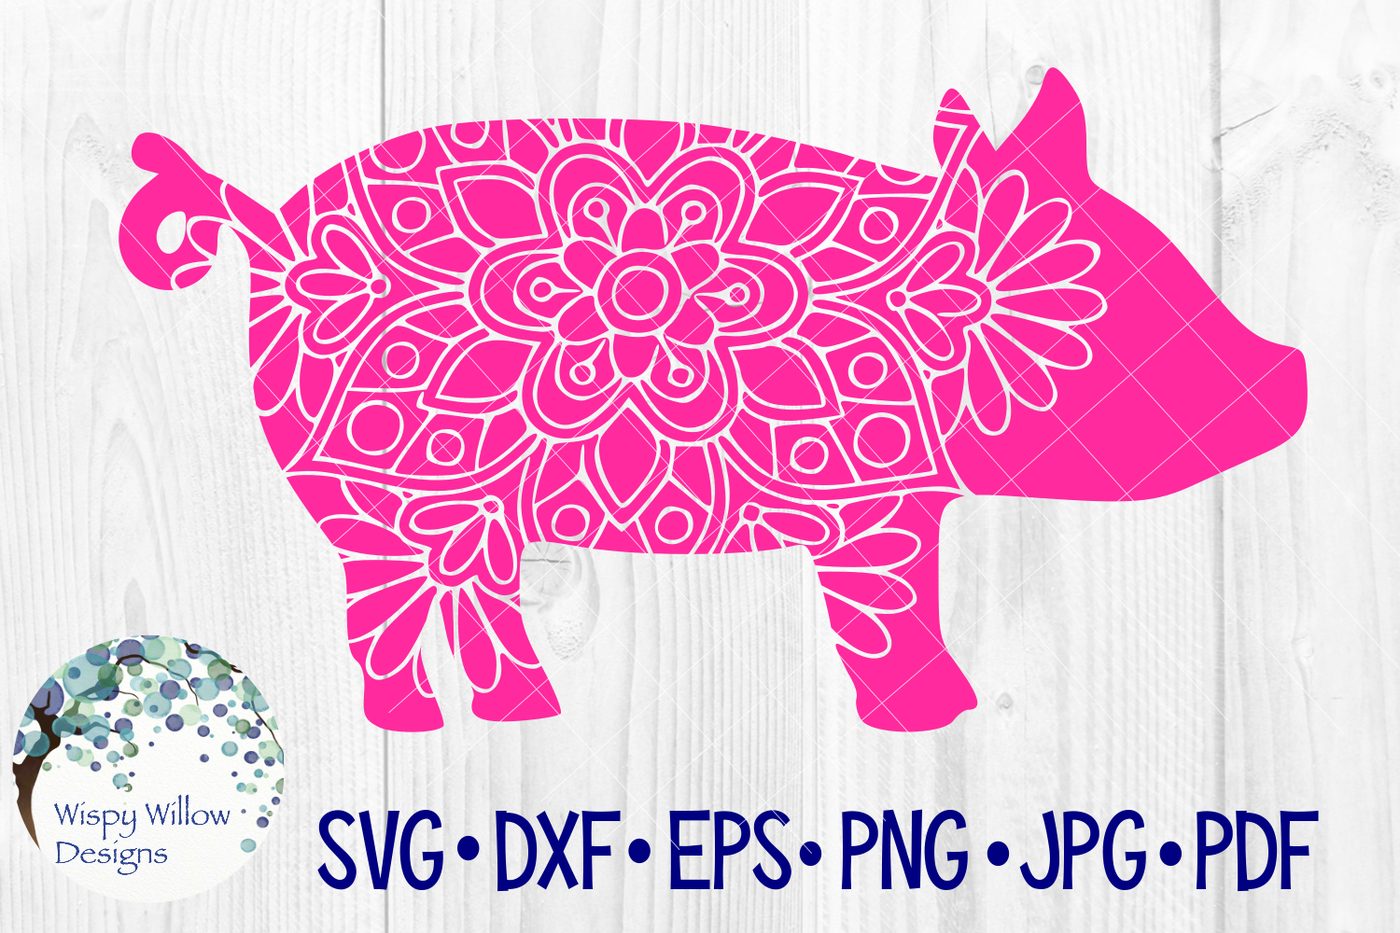 Download Floral Pig Mandala Svg Dxf Eps Png Jpg Pdf By Wispy Willow Designs Thehungryjpeg Com